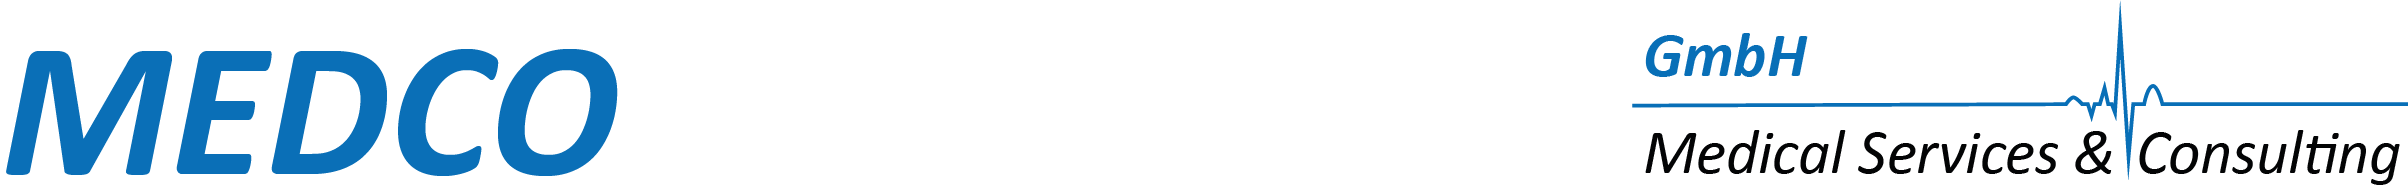 Logo der Medco GmbH